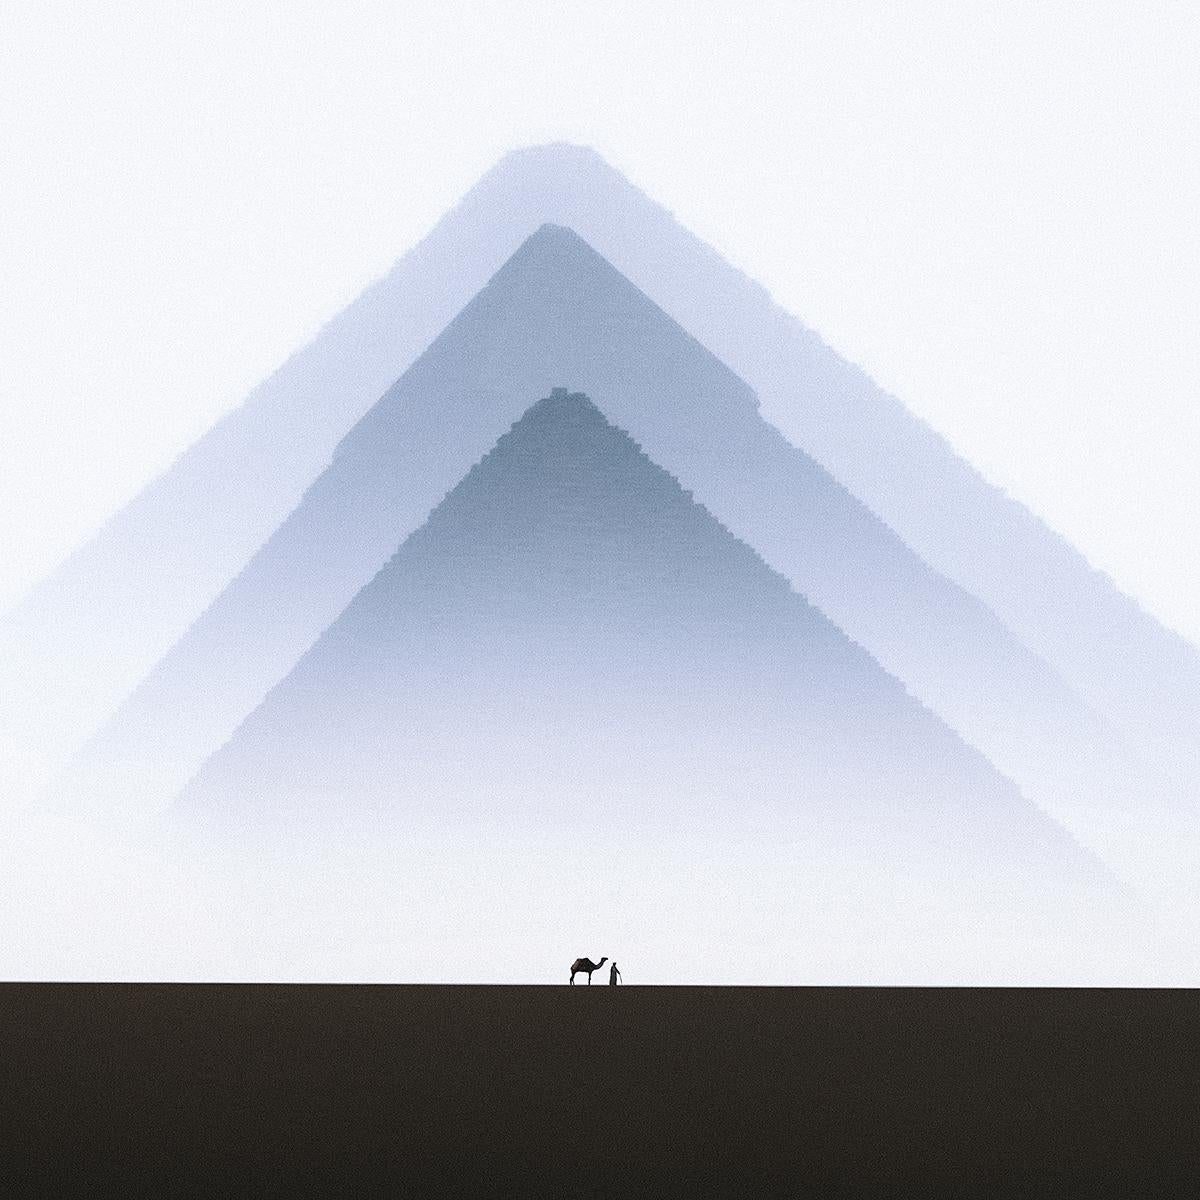 Landscape Photograph Karim Amr - Photographie Camel and Pyramids 64" x 64" encadrée par Karim